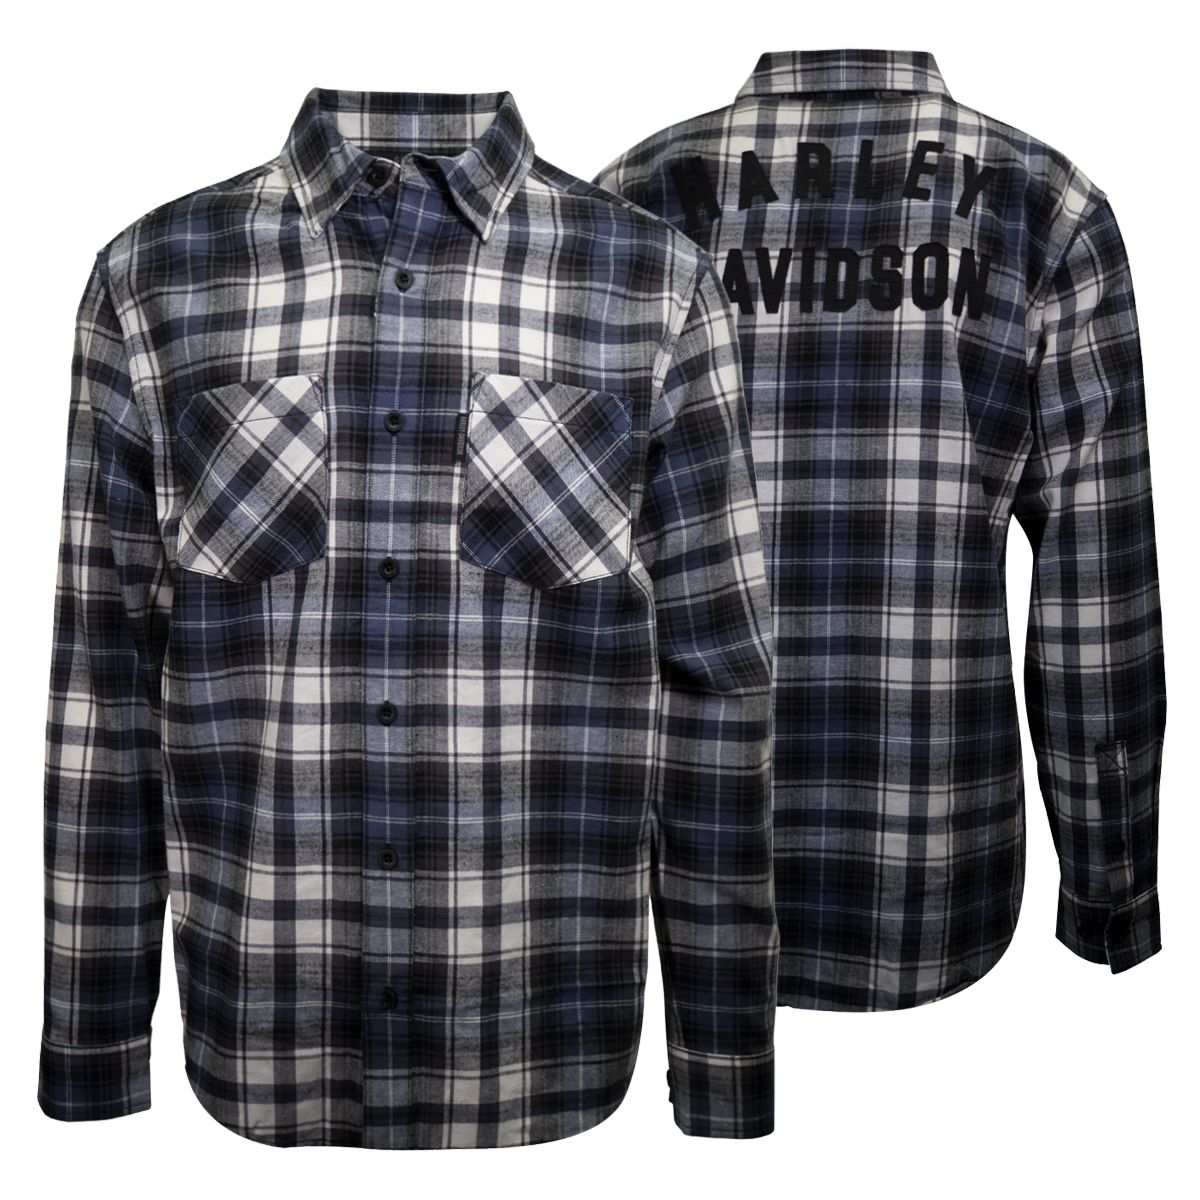 Harley-Davidson Men's Blue White Black Plaid L/S Woven Shirt (S02)